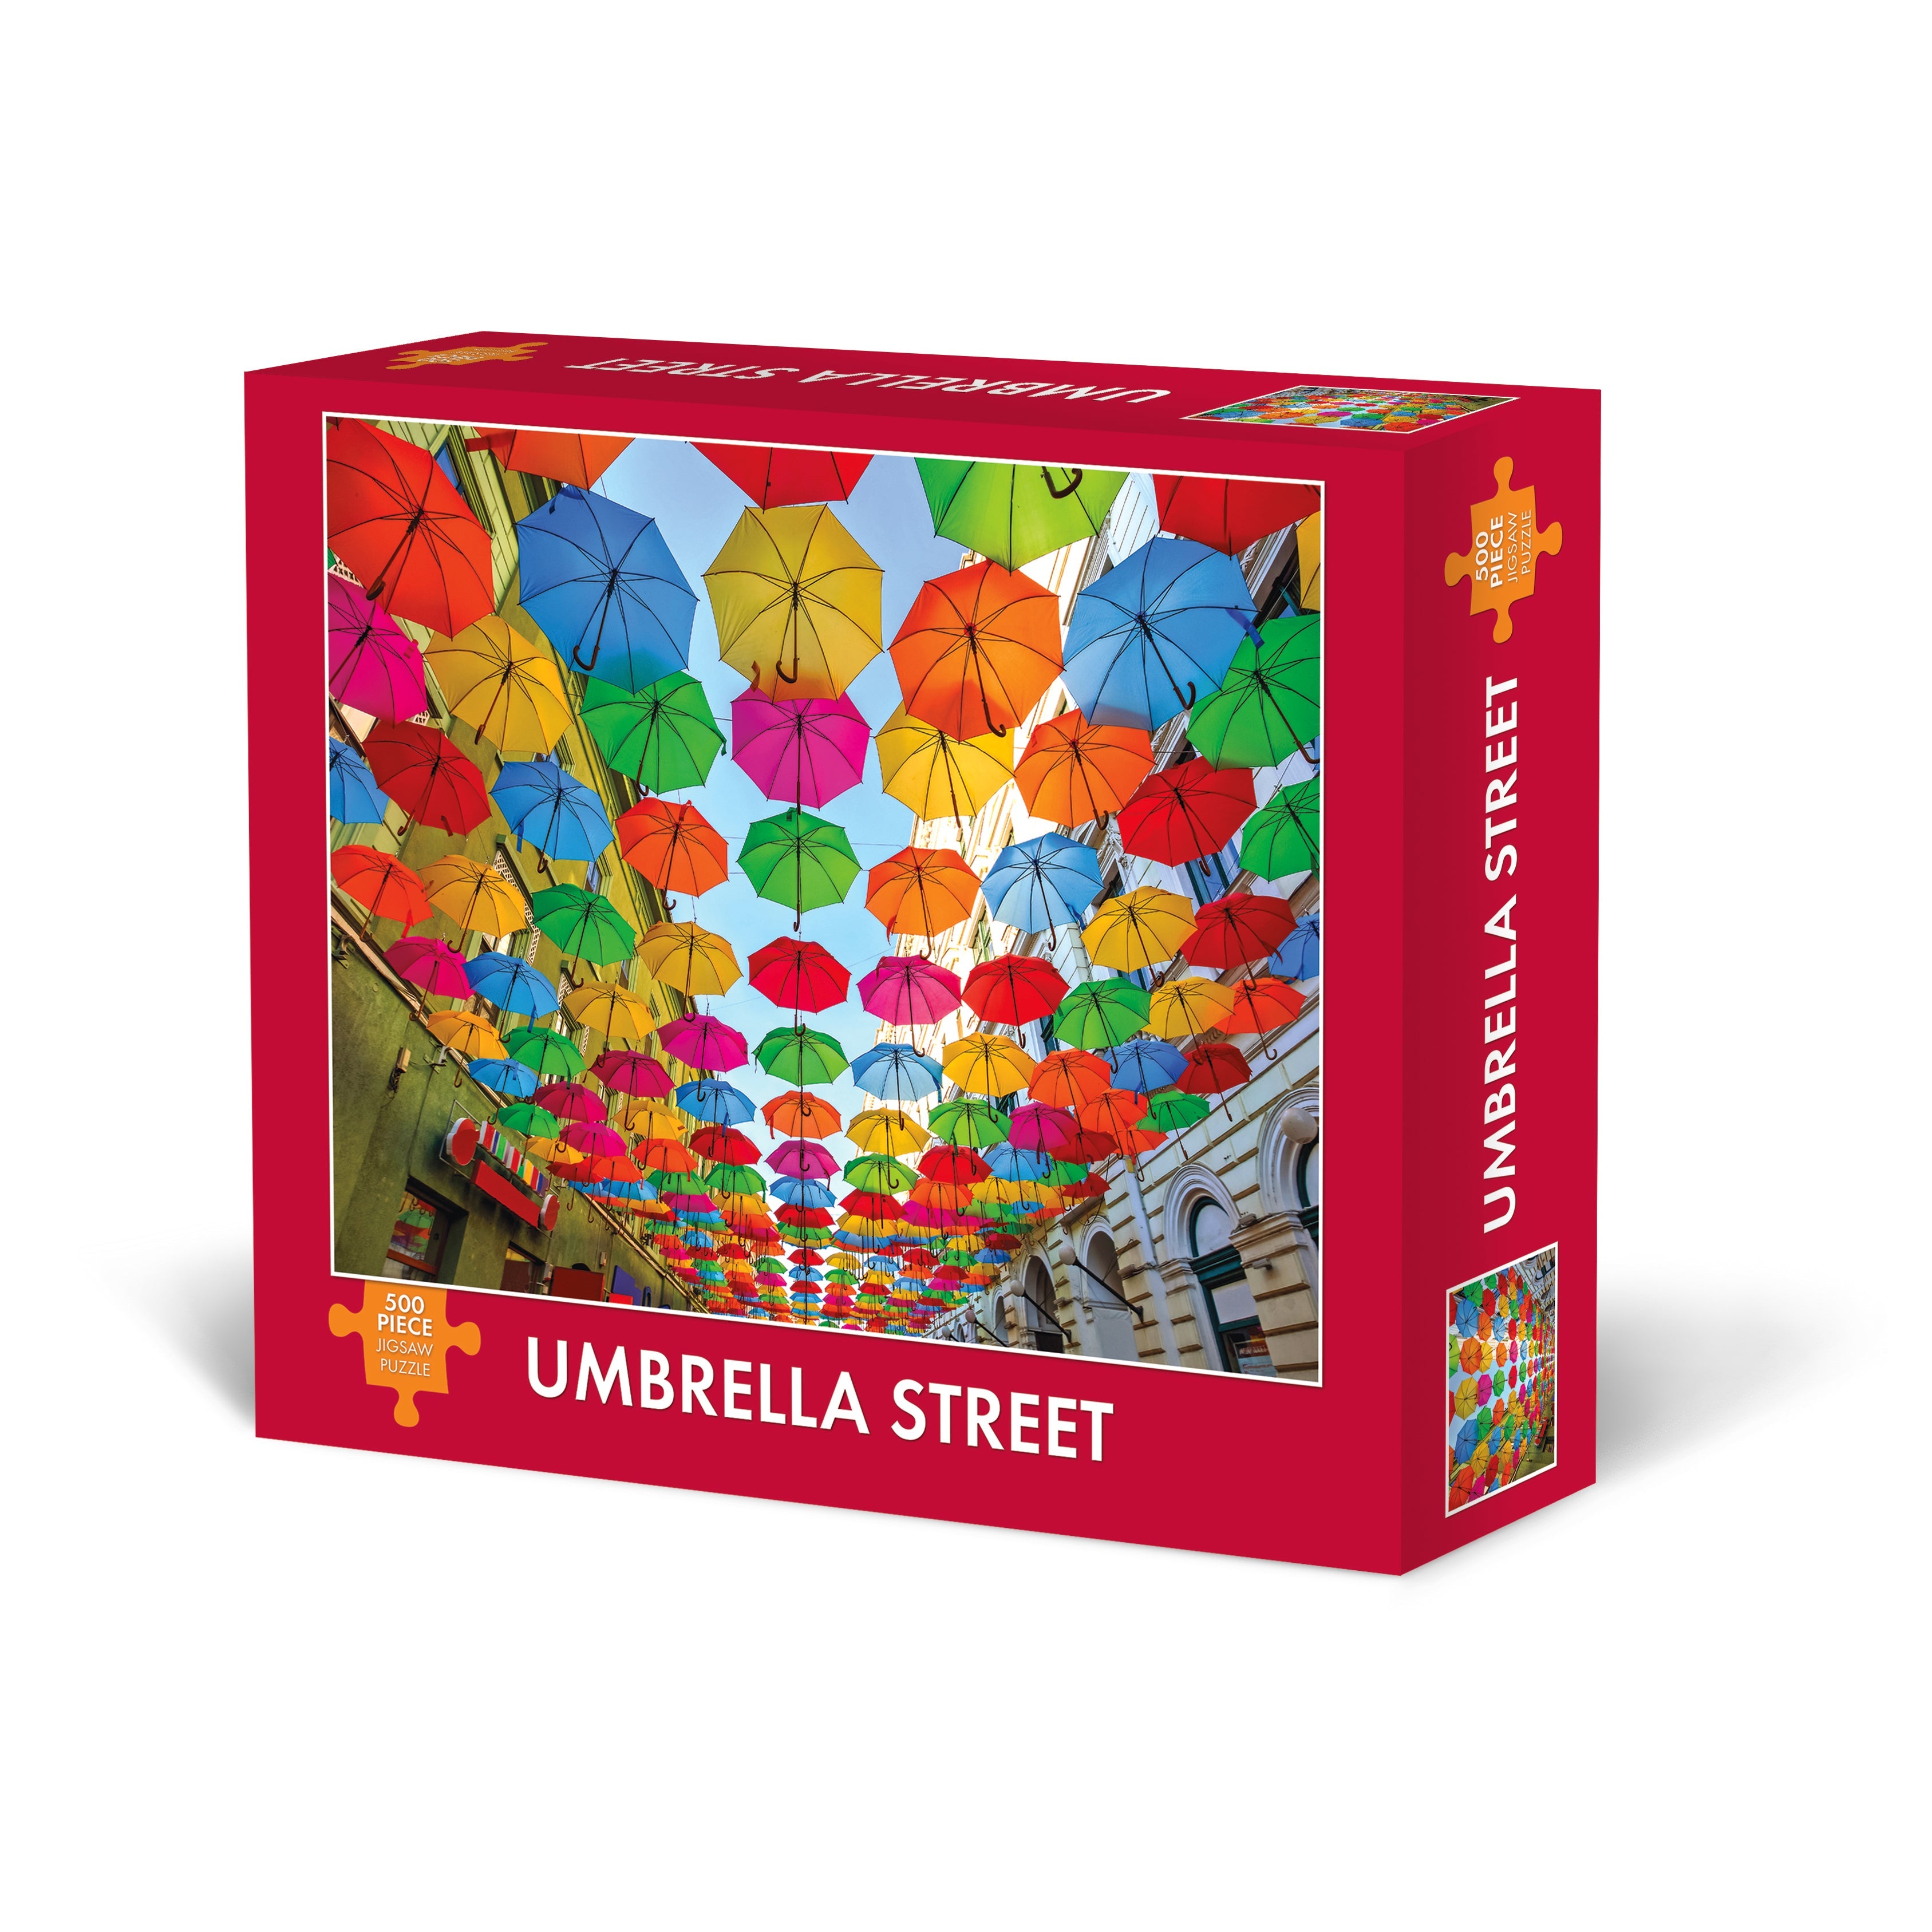 Umbrella Street 500 Piece - Jigsaw Puzzle